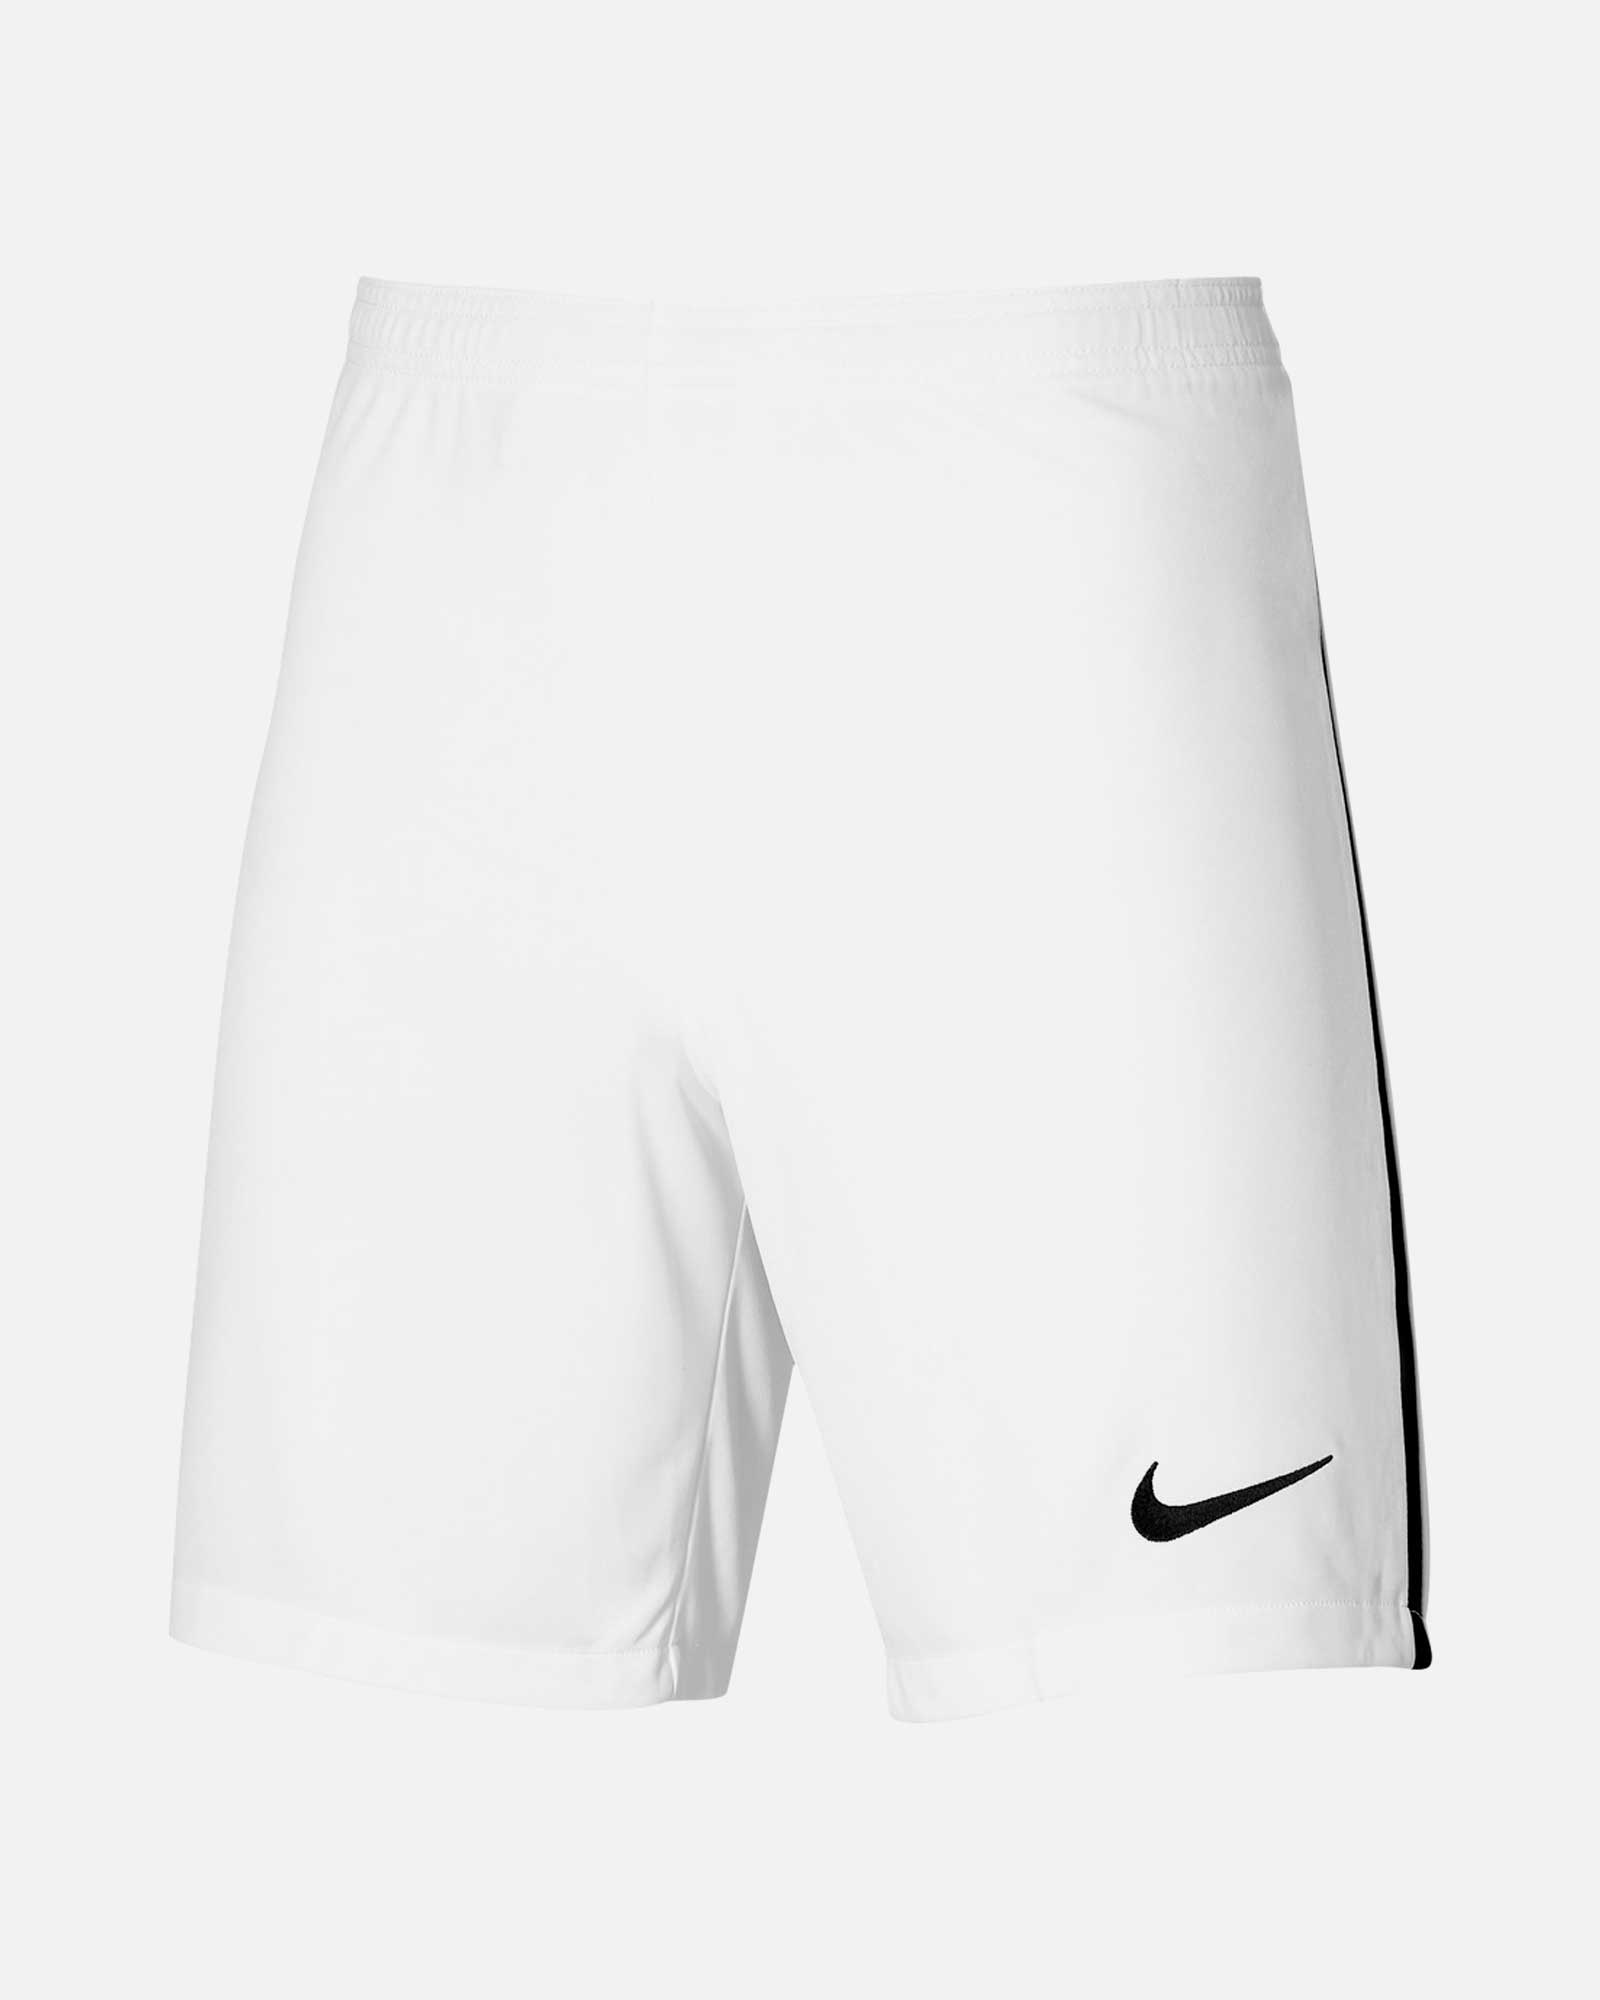 Pantalón Nike Knit League III